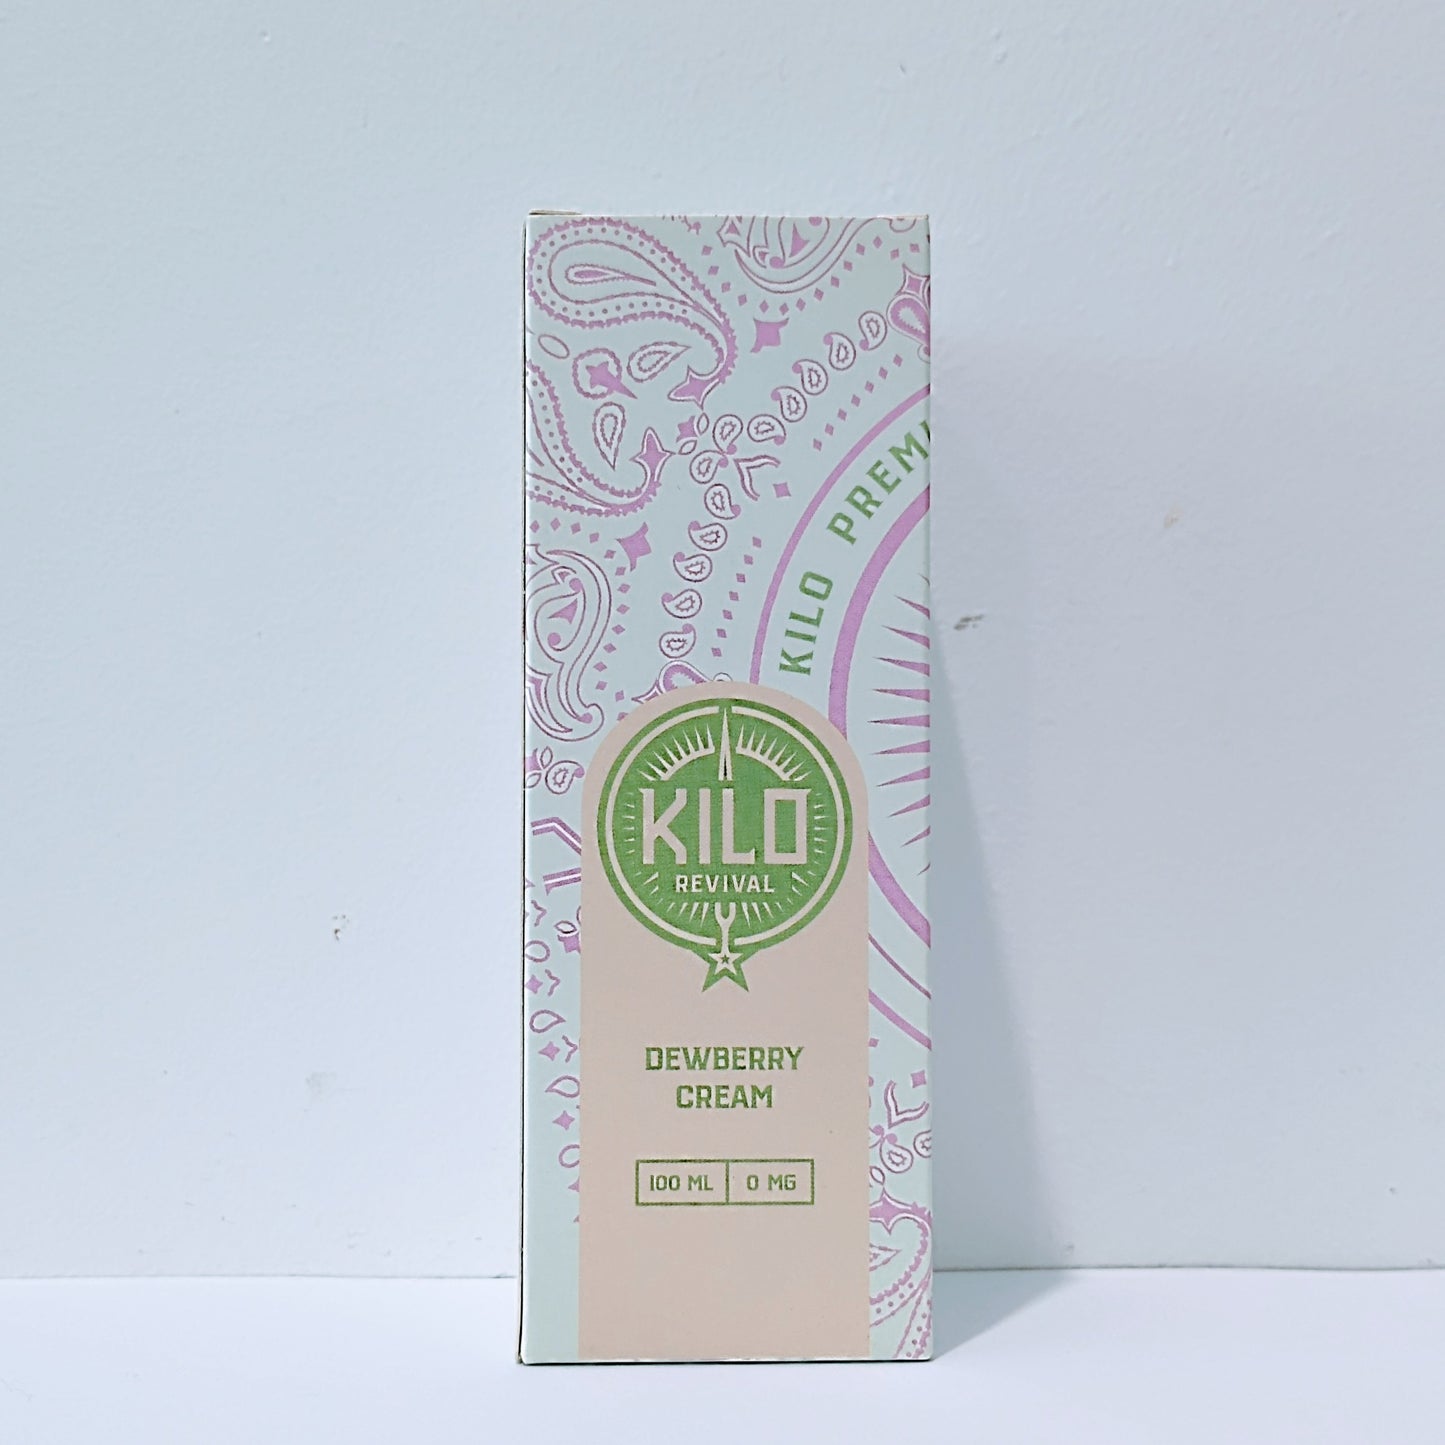 Kilo E-liquids - Revival 100ml